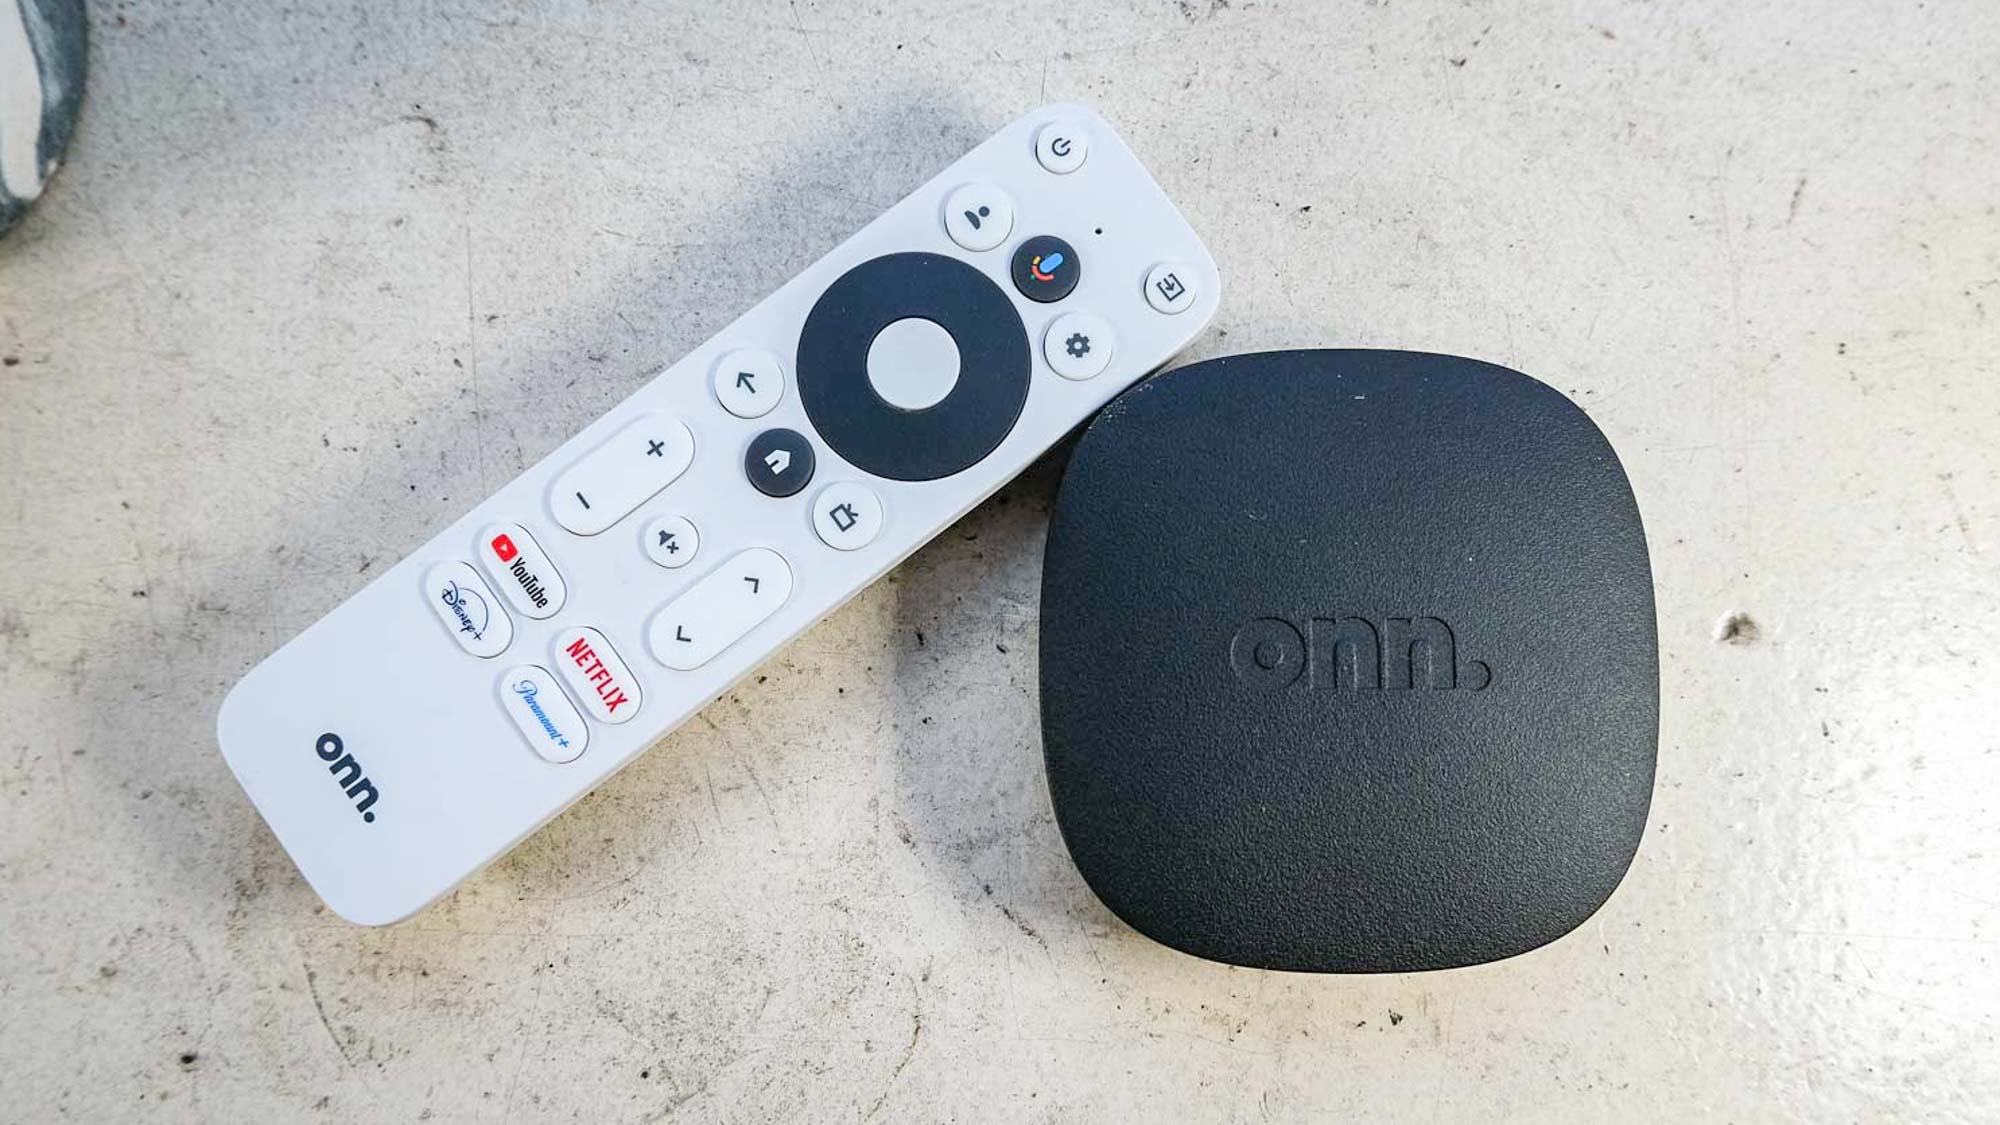 (R, L) Google TV streaming box and remote control